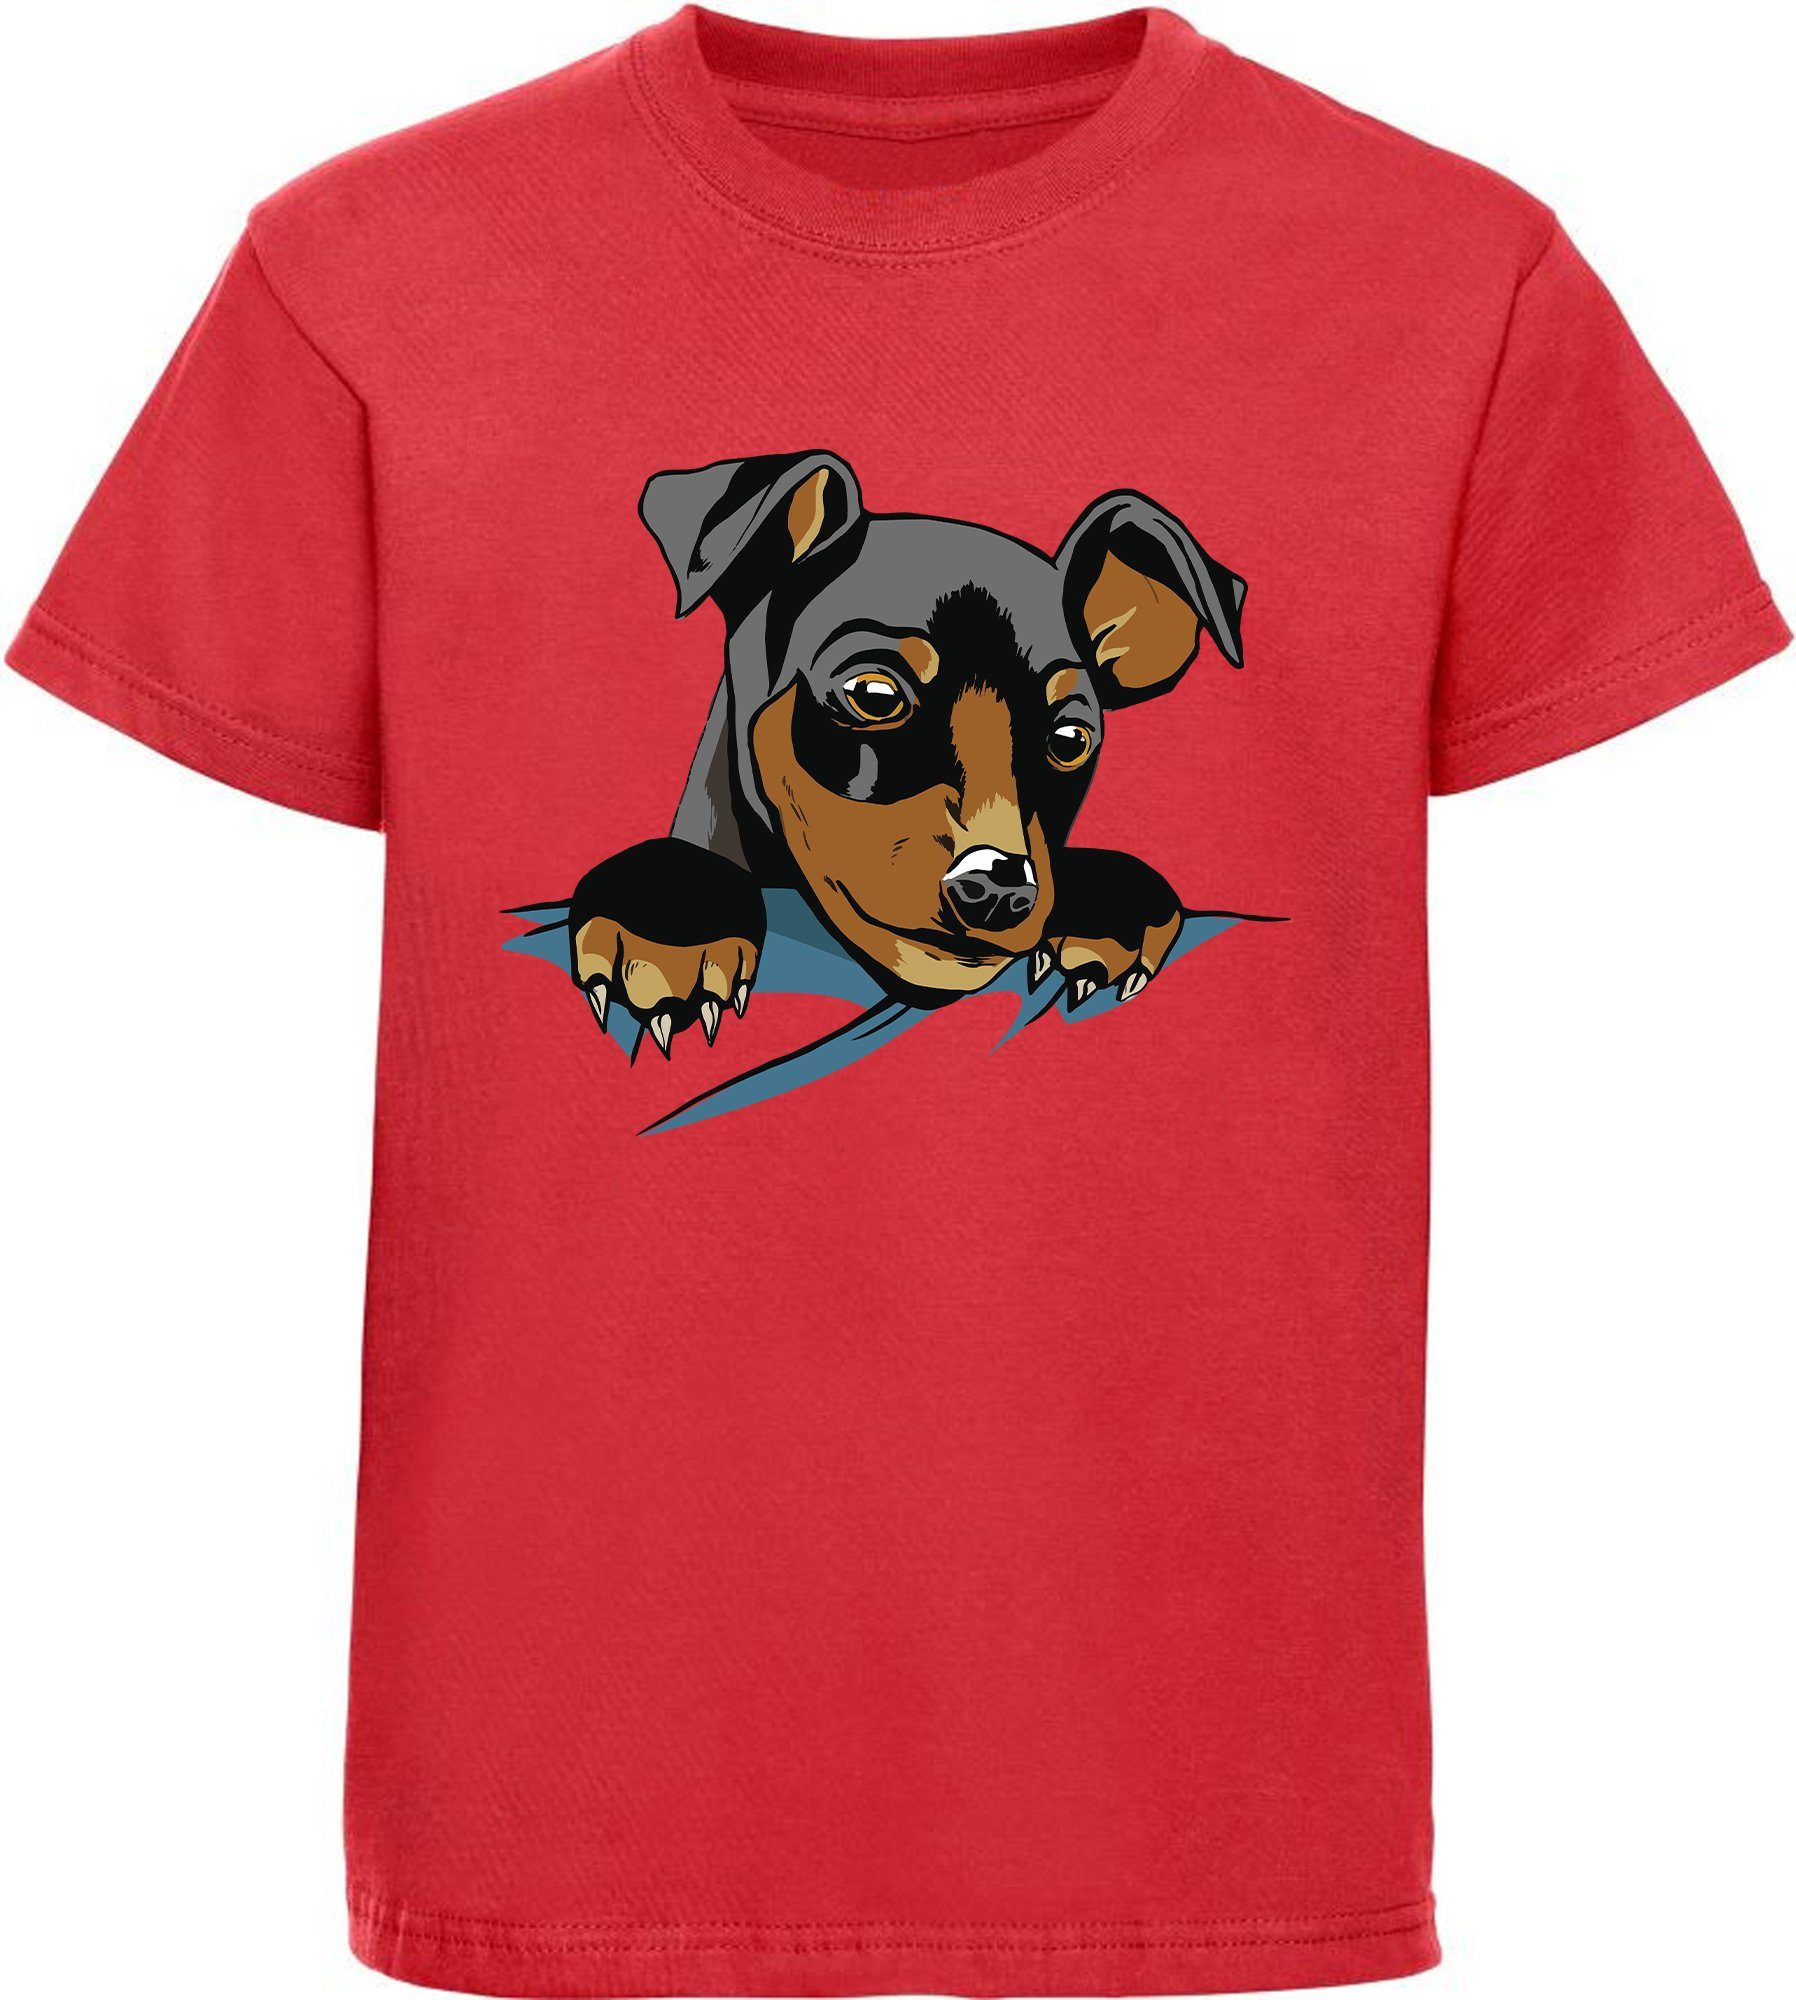 MyDesign24 Print-Shirt bedrucktes Kinder Hunde T-Shirt - Süßer Welpe Baumwollshirt mit Aufdruck, i227 rot